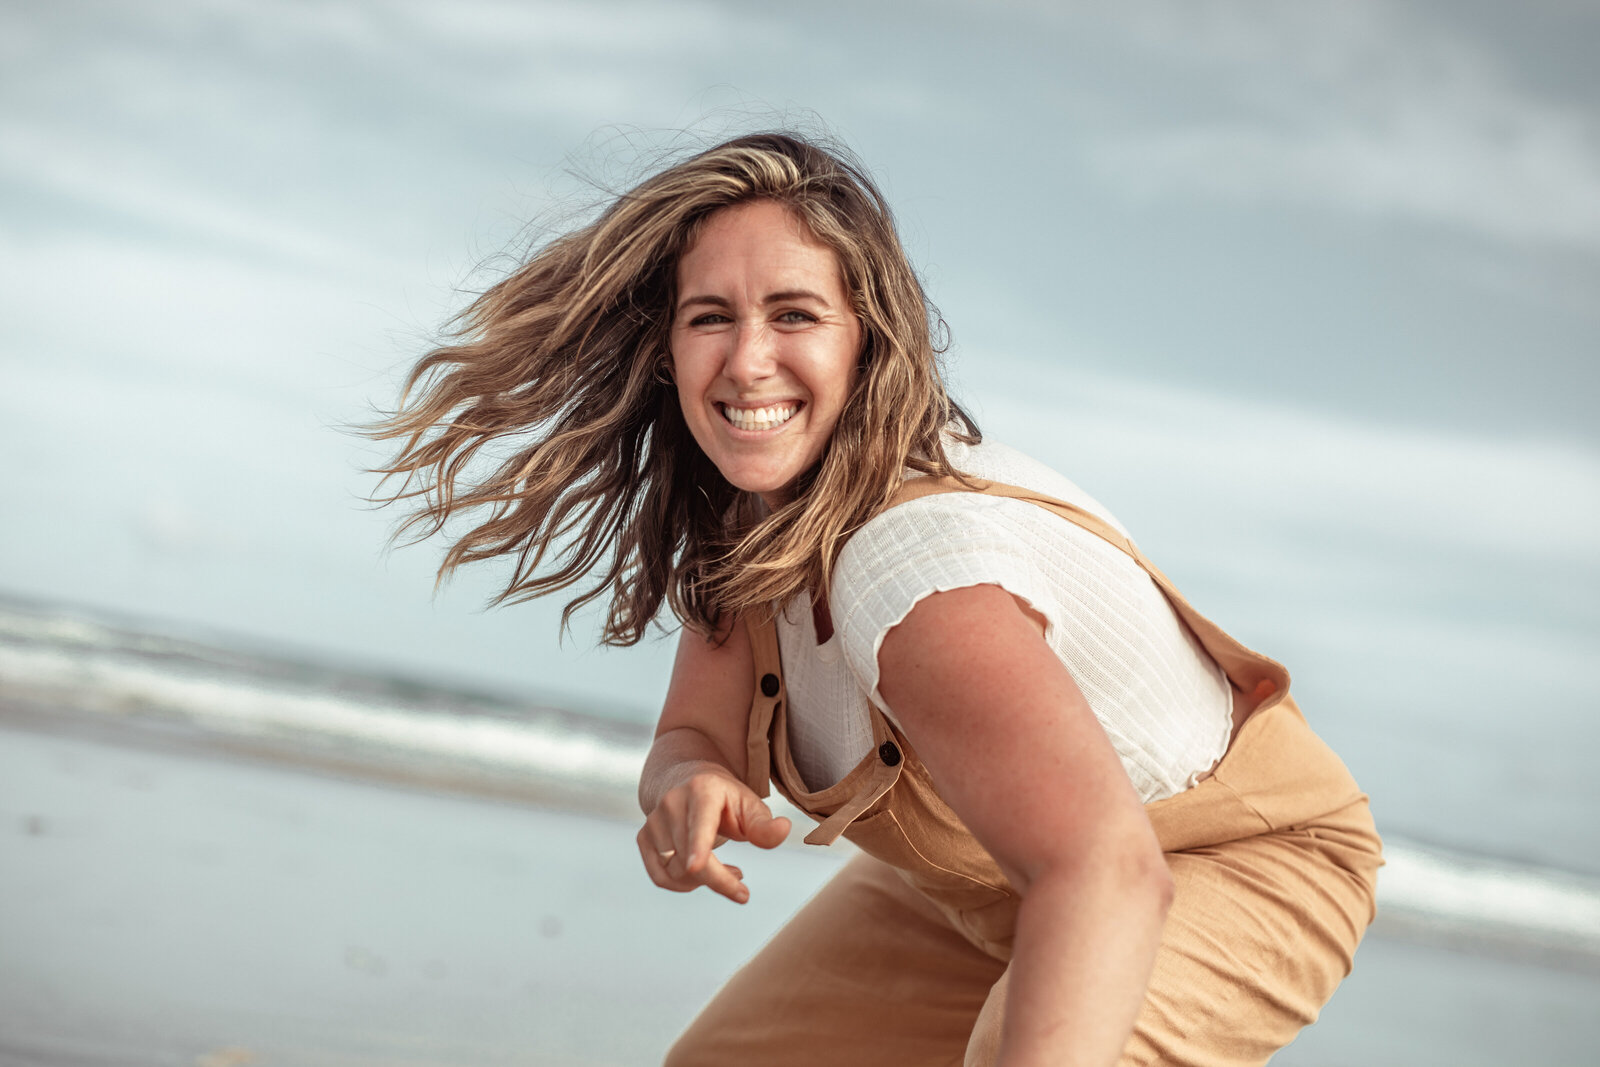 Joyful woman enjoying the beach with a big smile